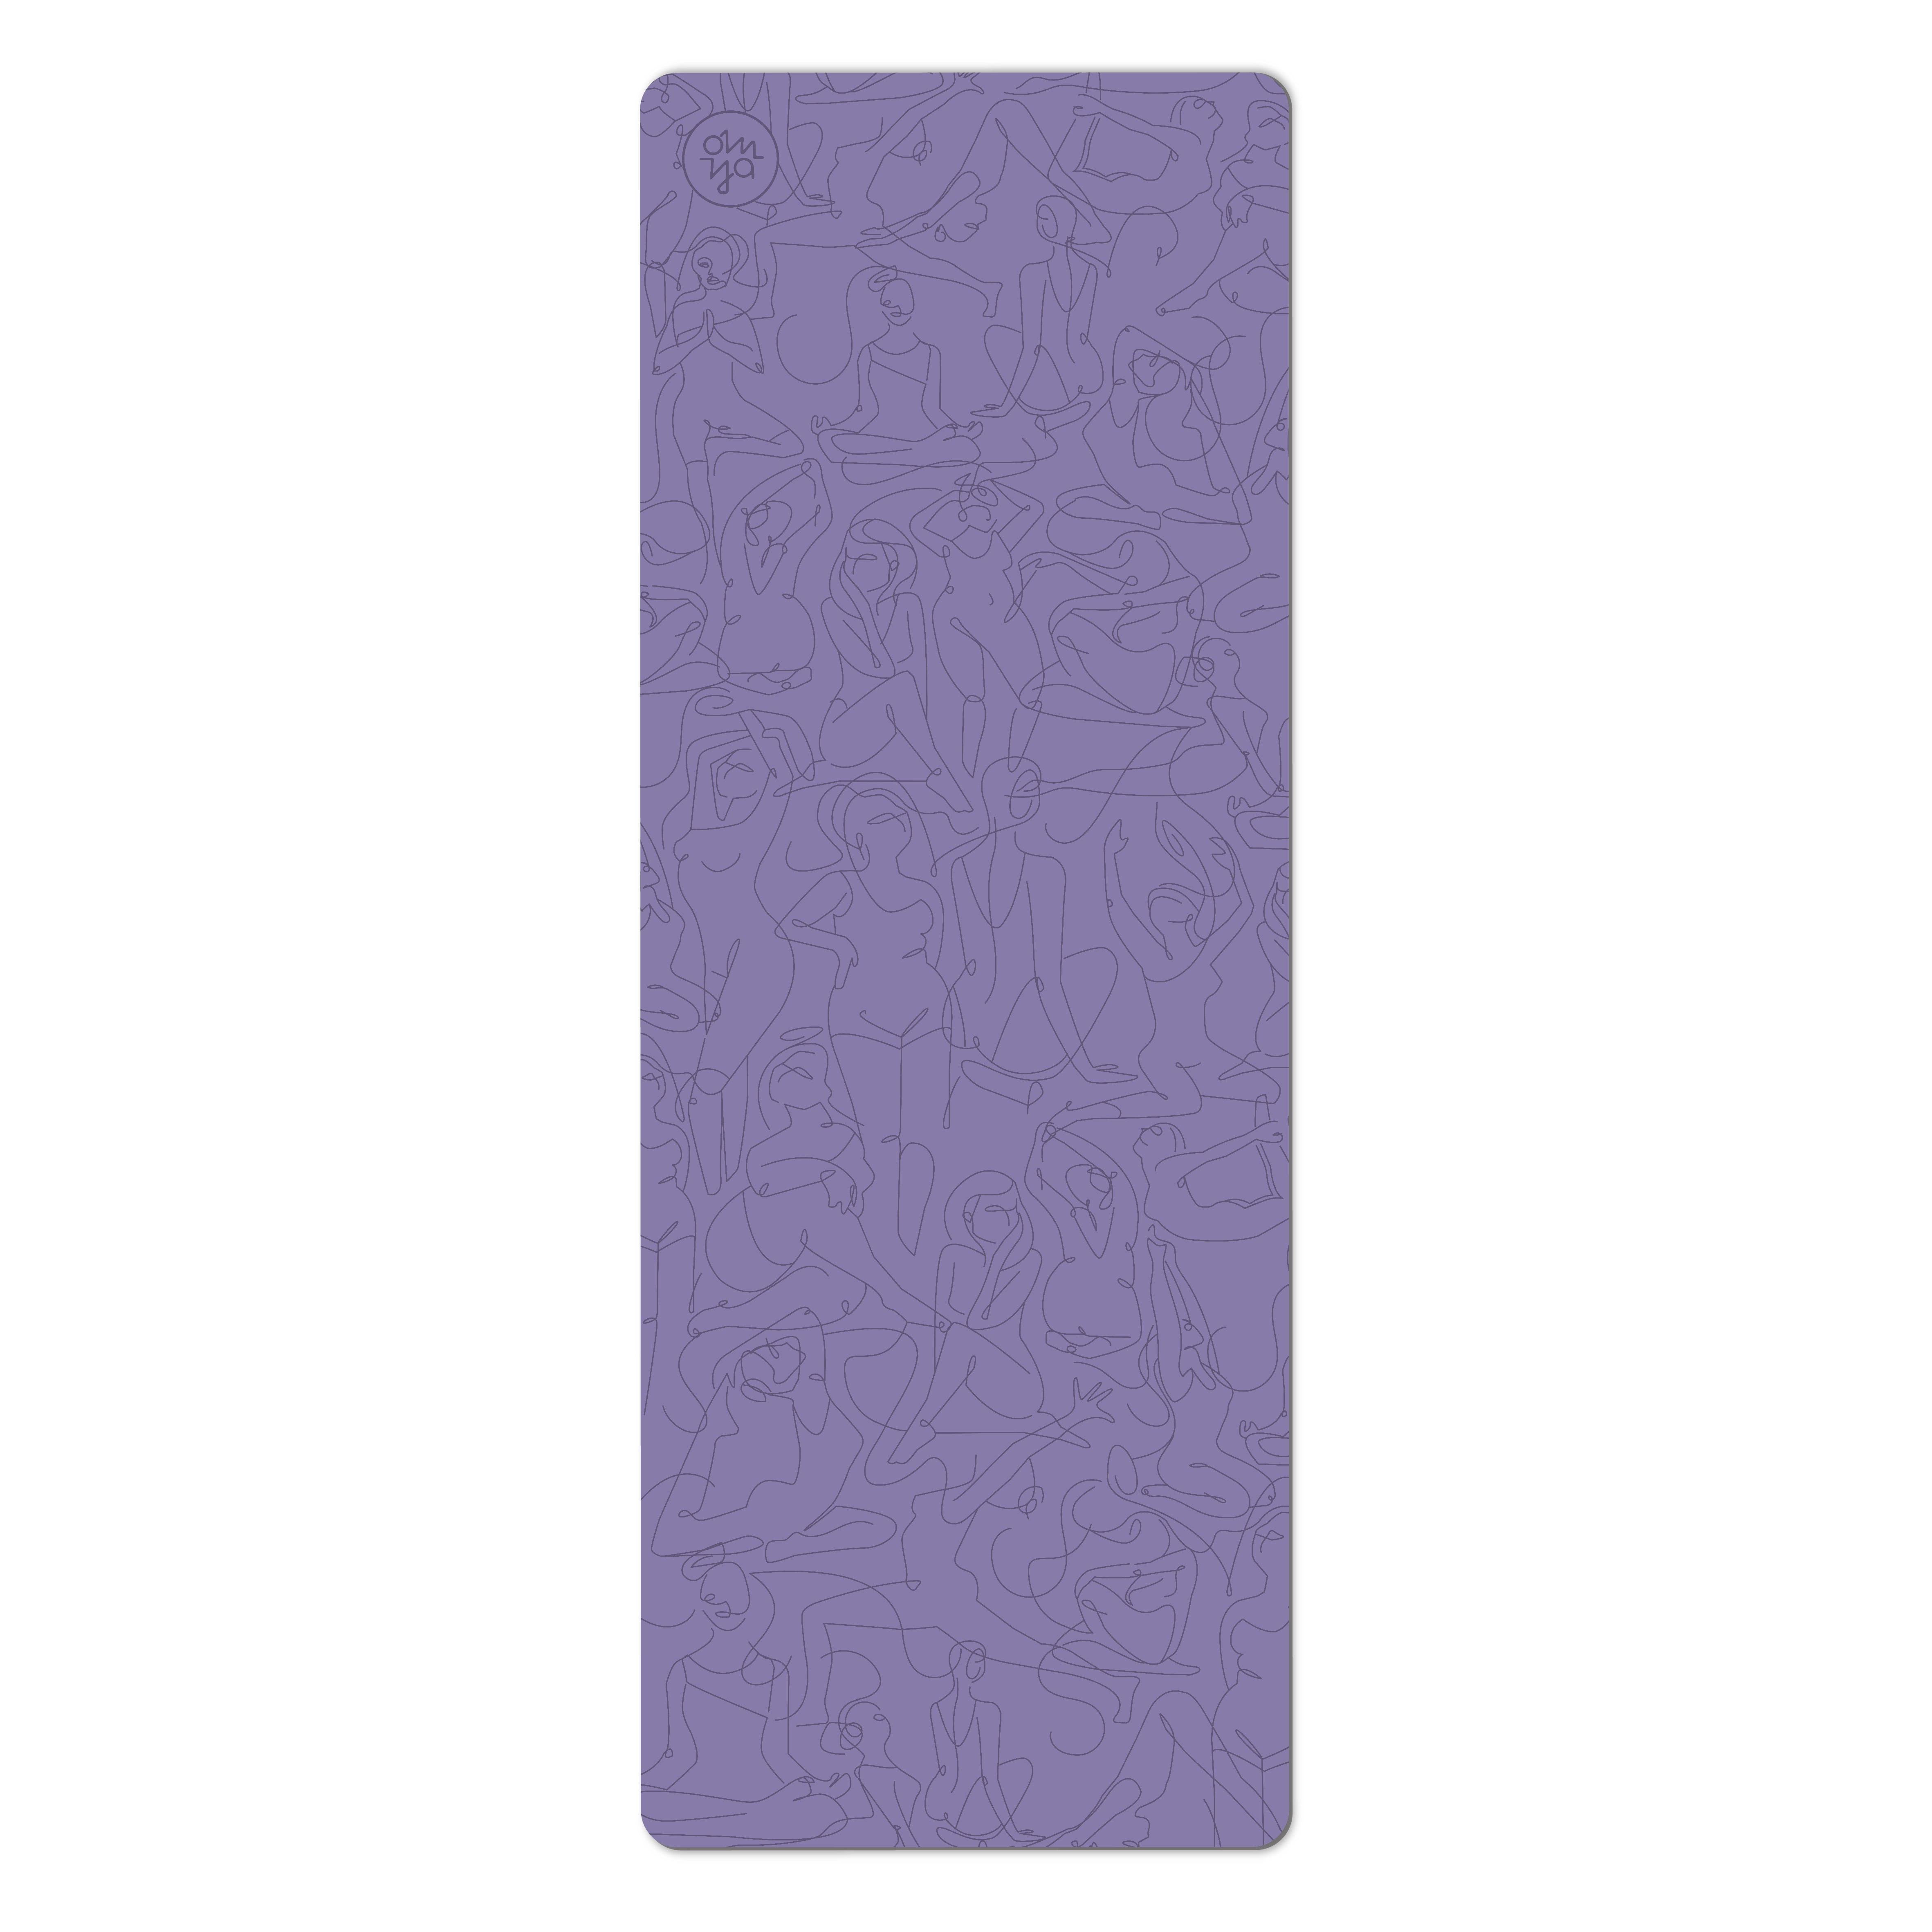 Advanced Grip Yoga Mat - Lavender Goddess